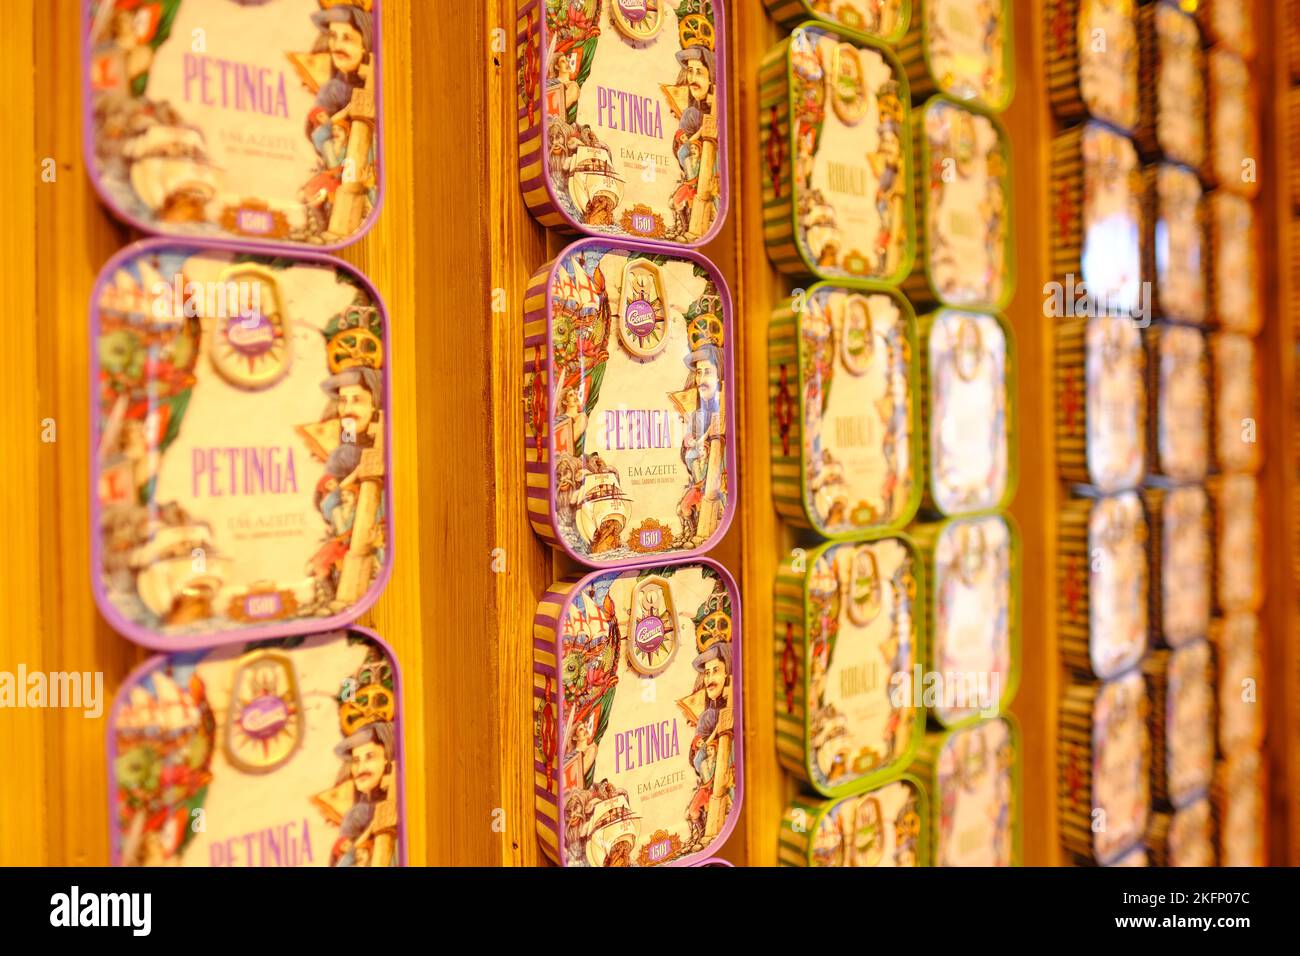 Porto Portugal - local food rows of tinned Petinga sardines on sale in tourist sovenir shop Stock Photo